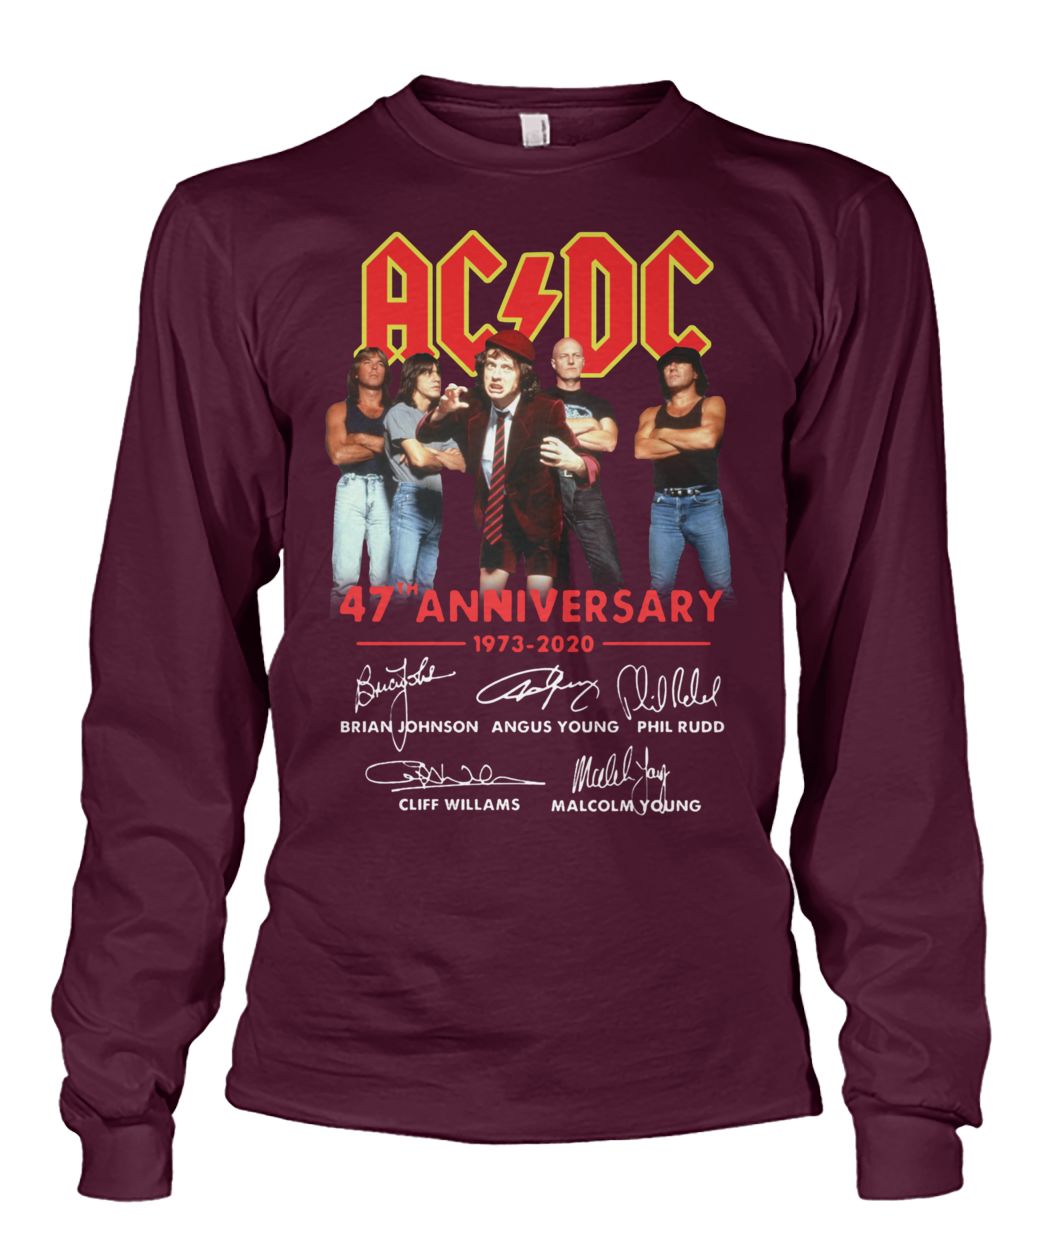 ACDC band 47 anniversary 1973-2020 signatures unisex long sleeve